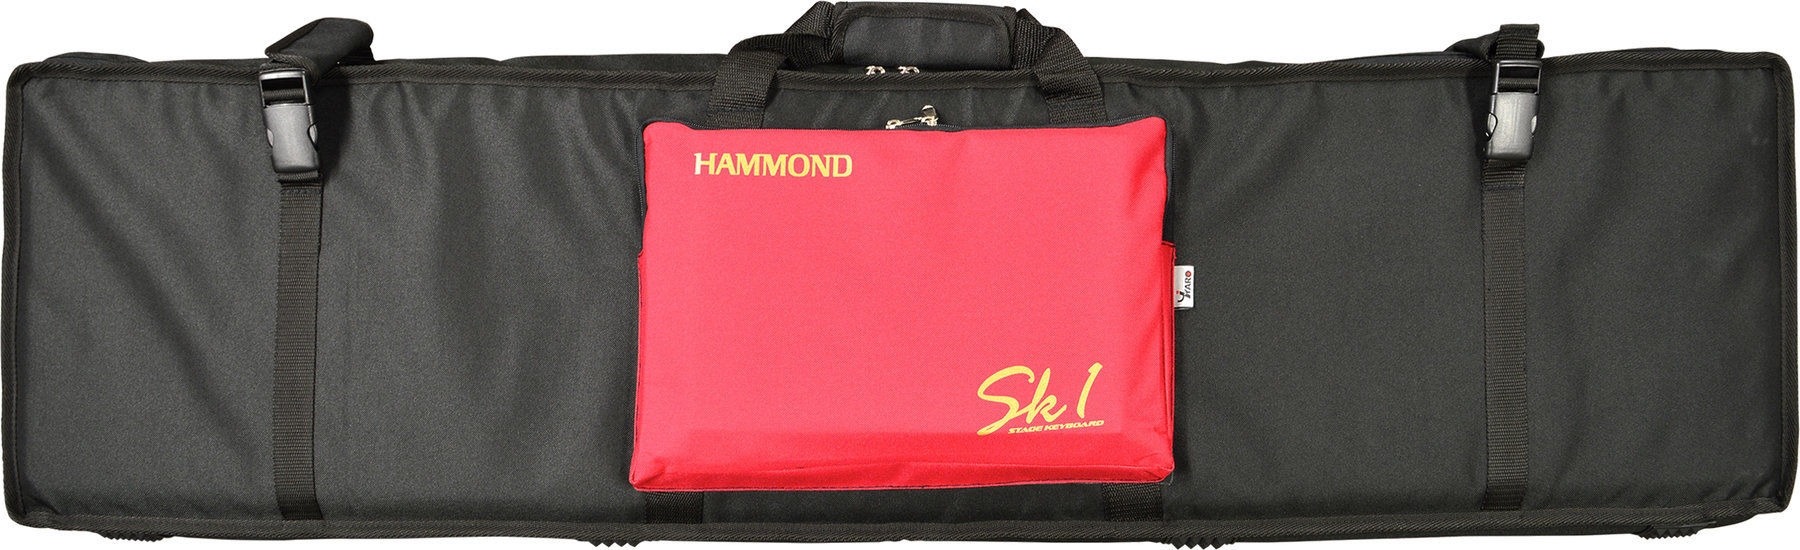 88 billentyű tok Hammond Softbag SK1-88